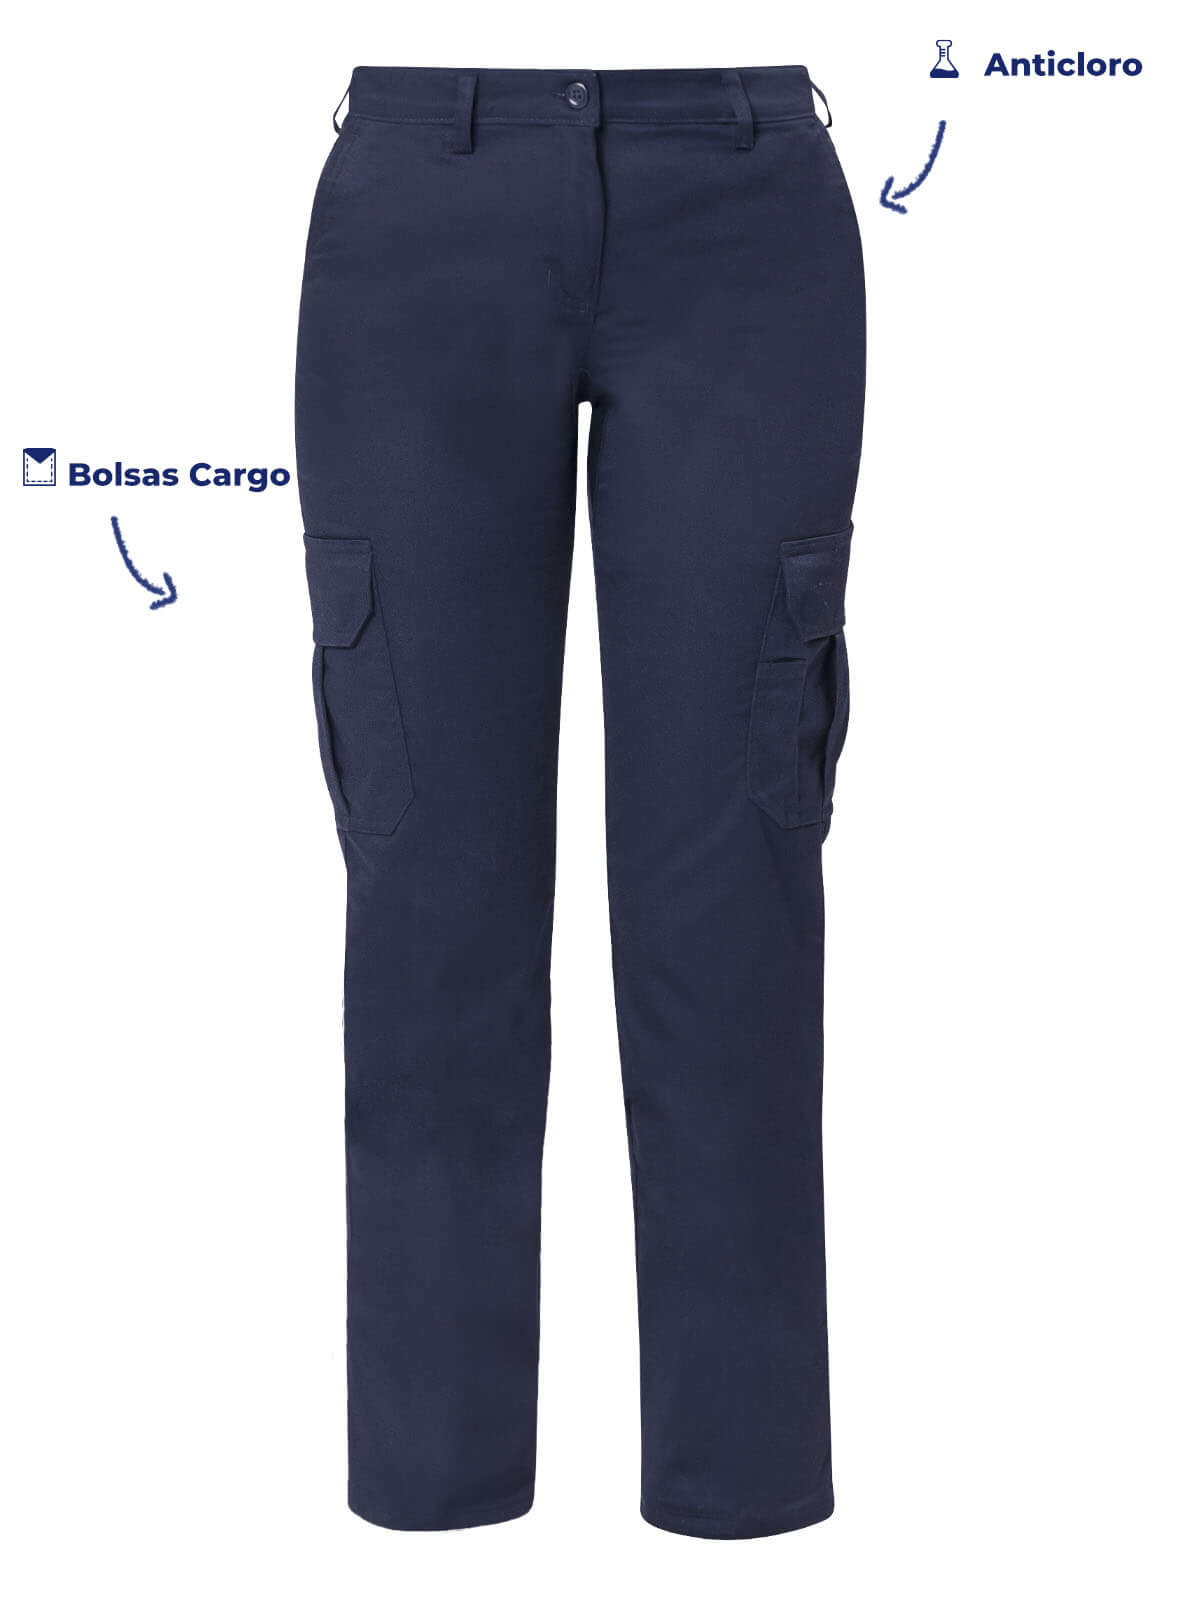 Pantalones tipo Cargo para dama color marino